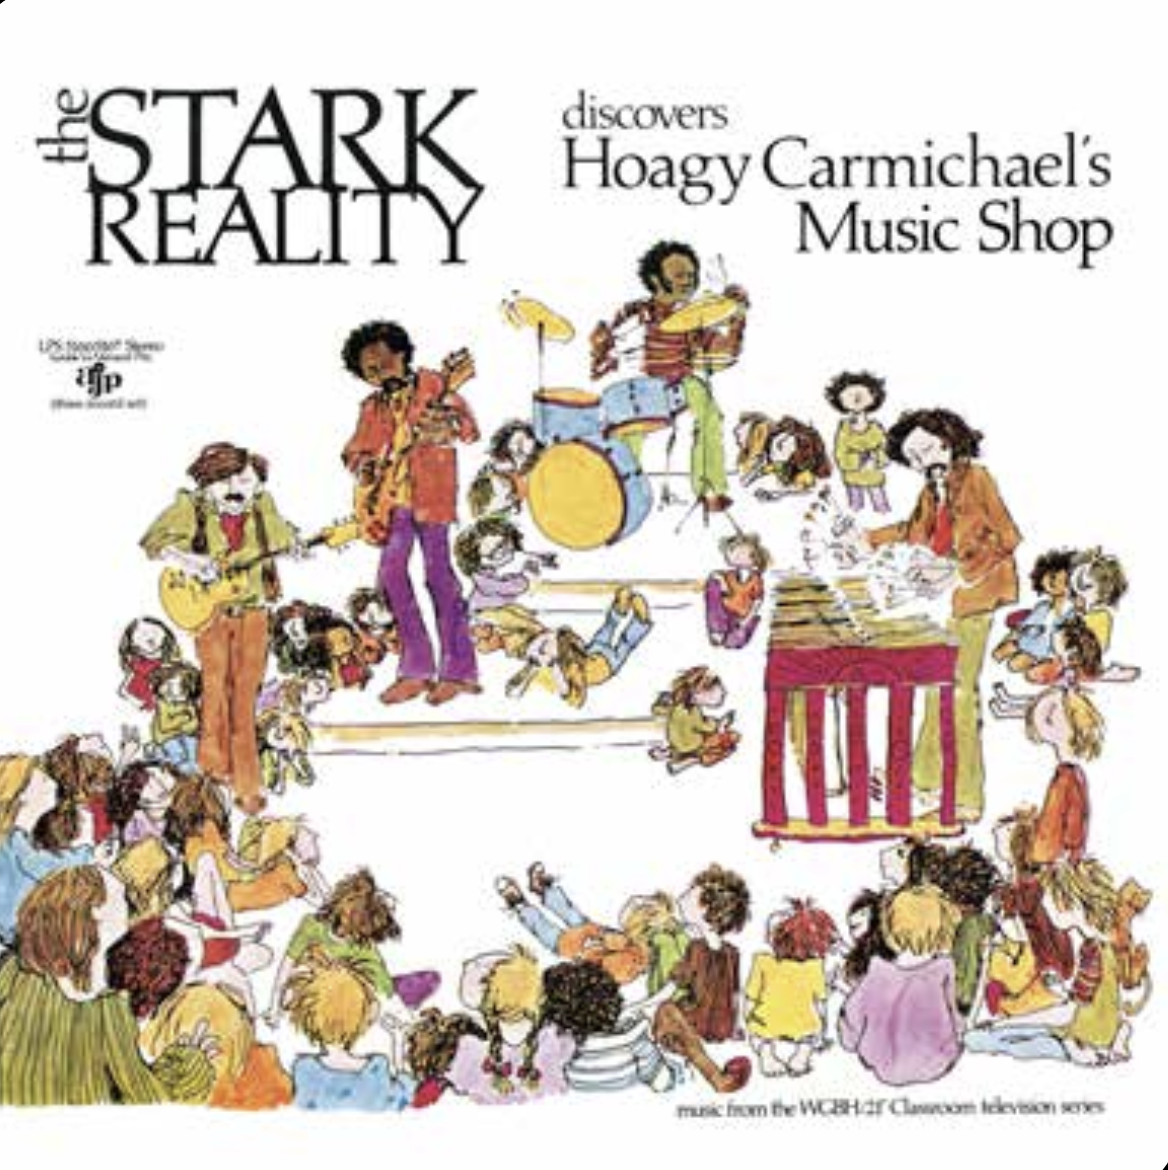 Album artwork for Album artwork for Discovers Hoagy Carmichael's Music Shop by Stark Reality by Discovers Hoagy Carmichael's Music Shop - Stark Reality